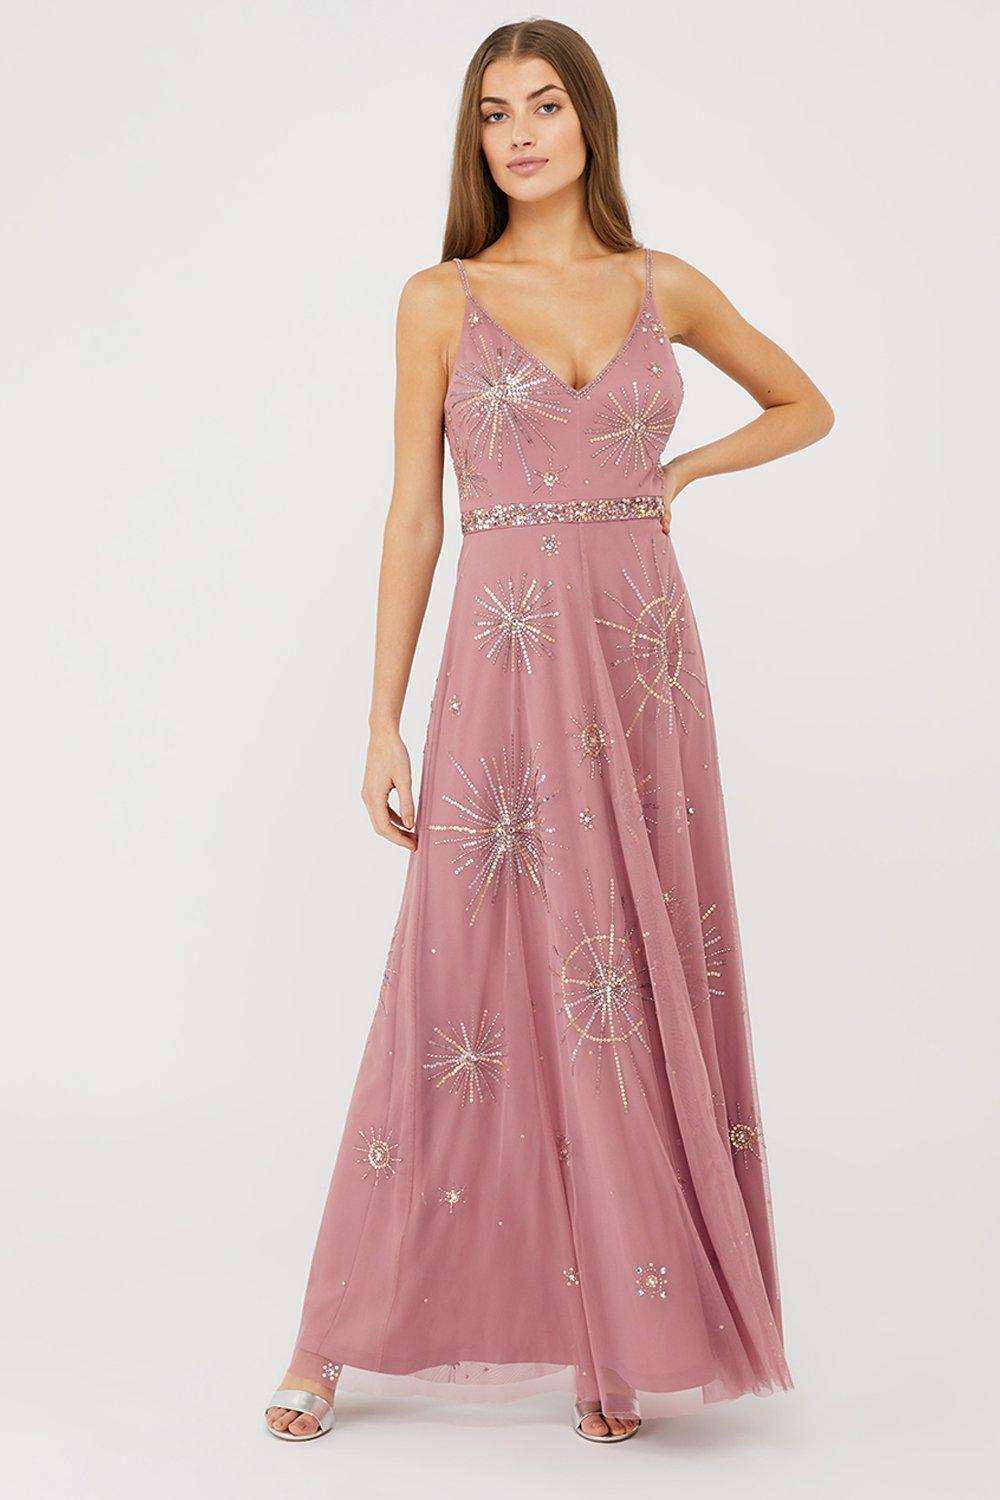 'Arabella' Star Embellished Maxi Dress